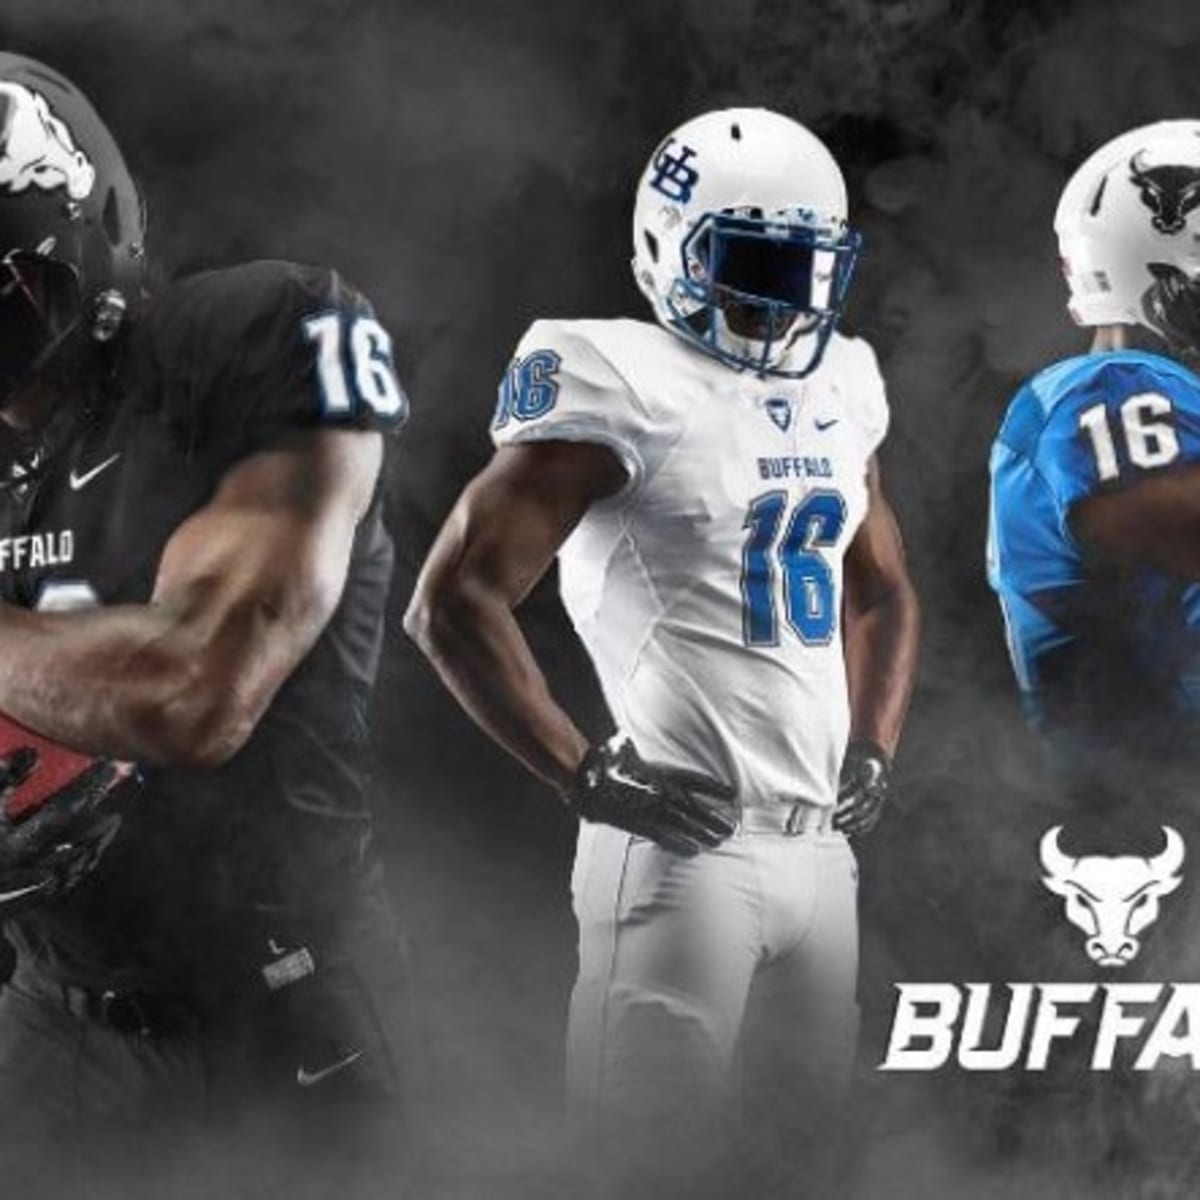 Confirmed new Buffalo Bulls uniforms show off 'New York